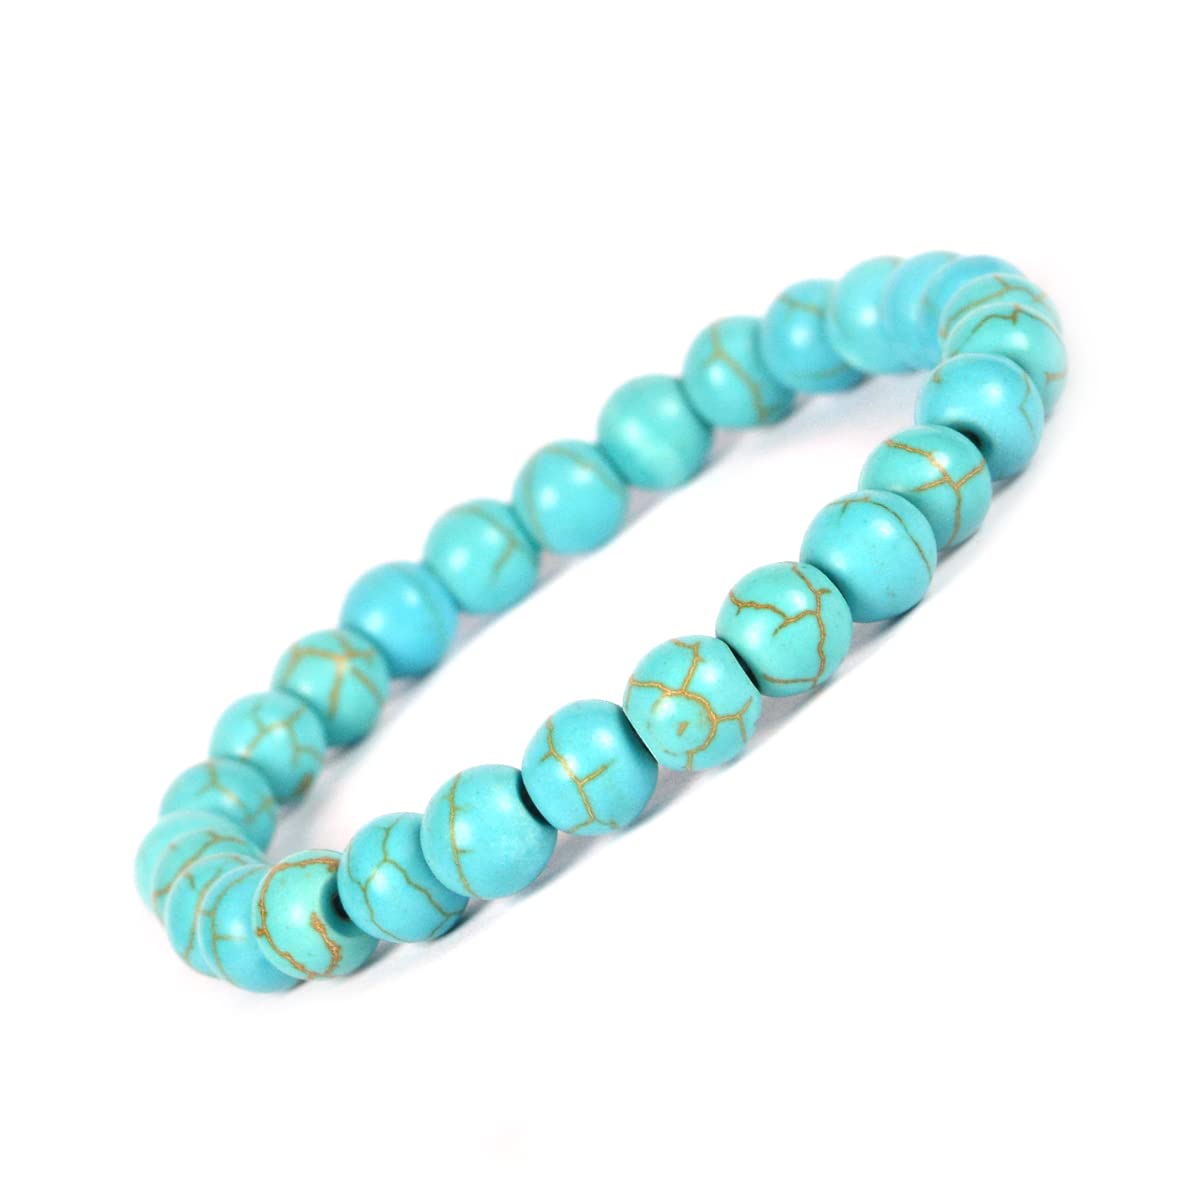 Turquoise Natural Healing Crystal Bracelet - 8mm Round Beads - Beaded Bracelet